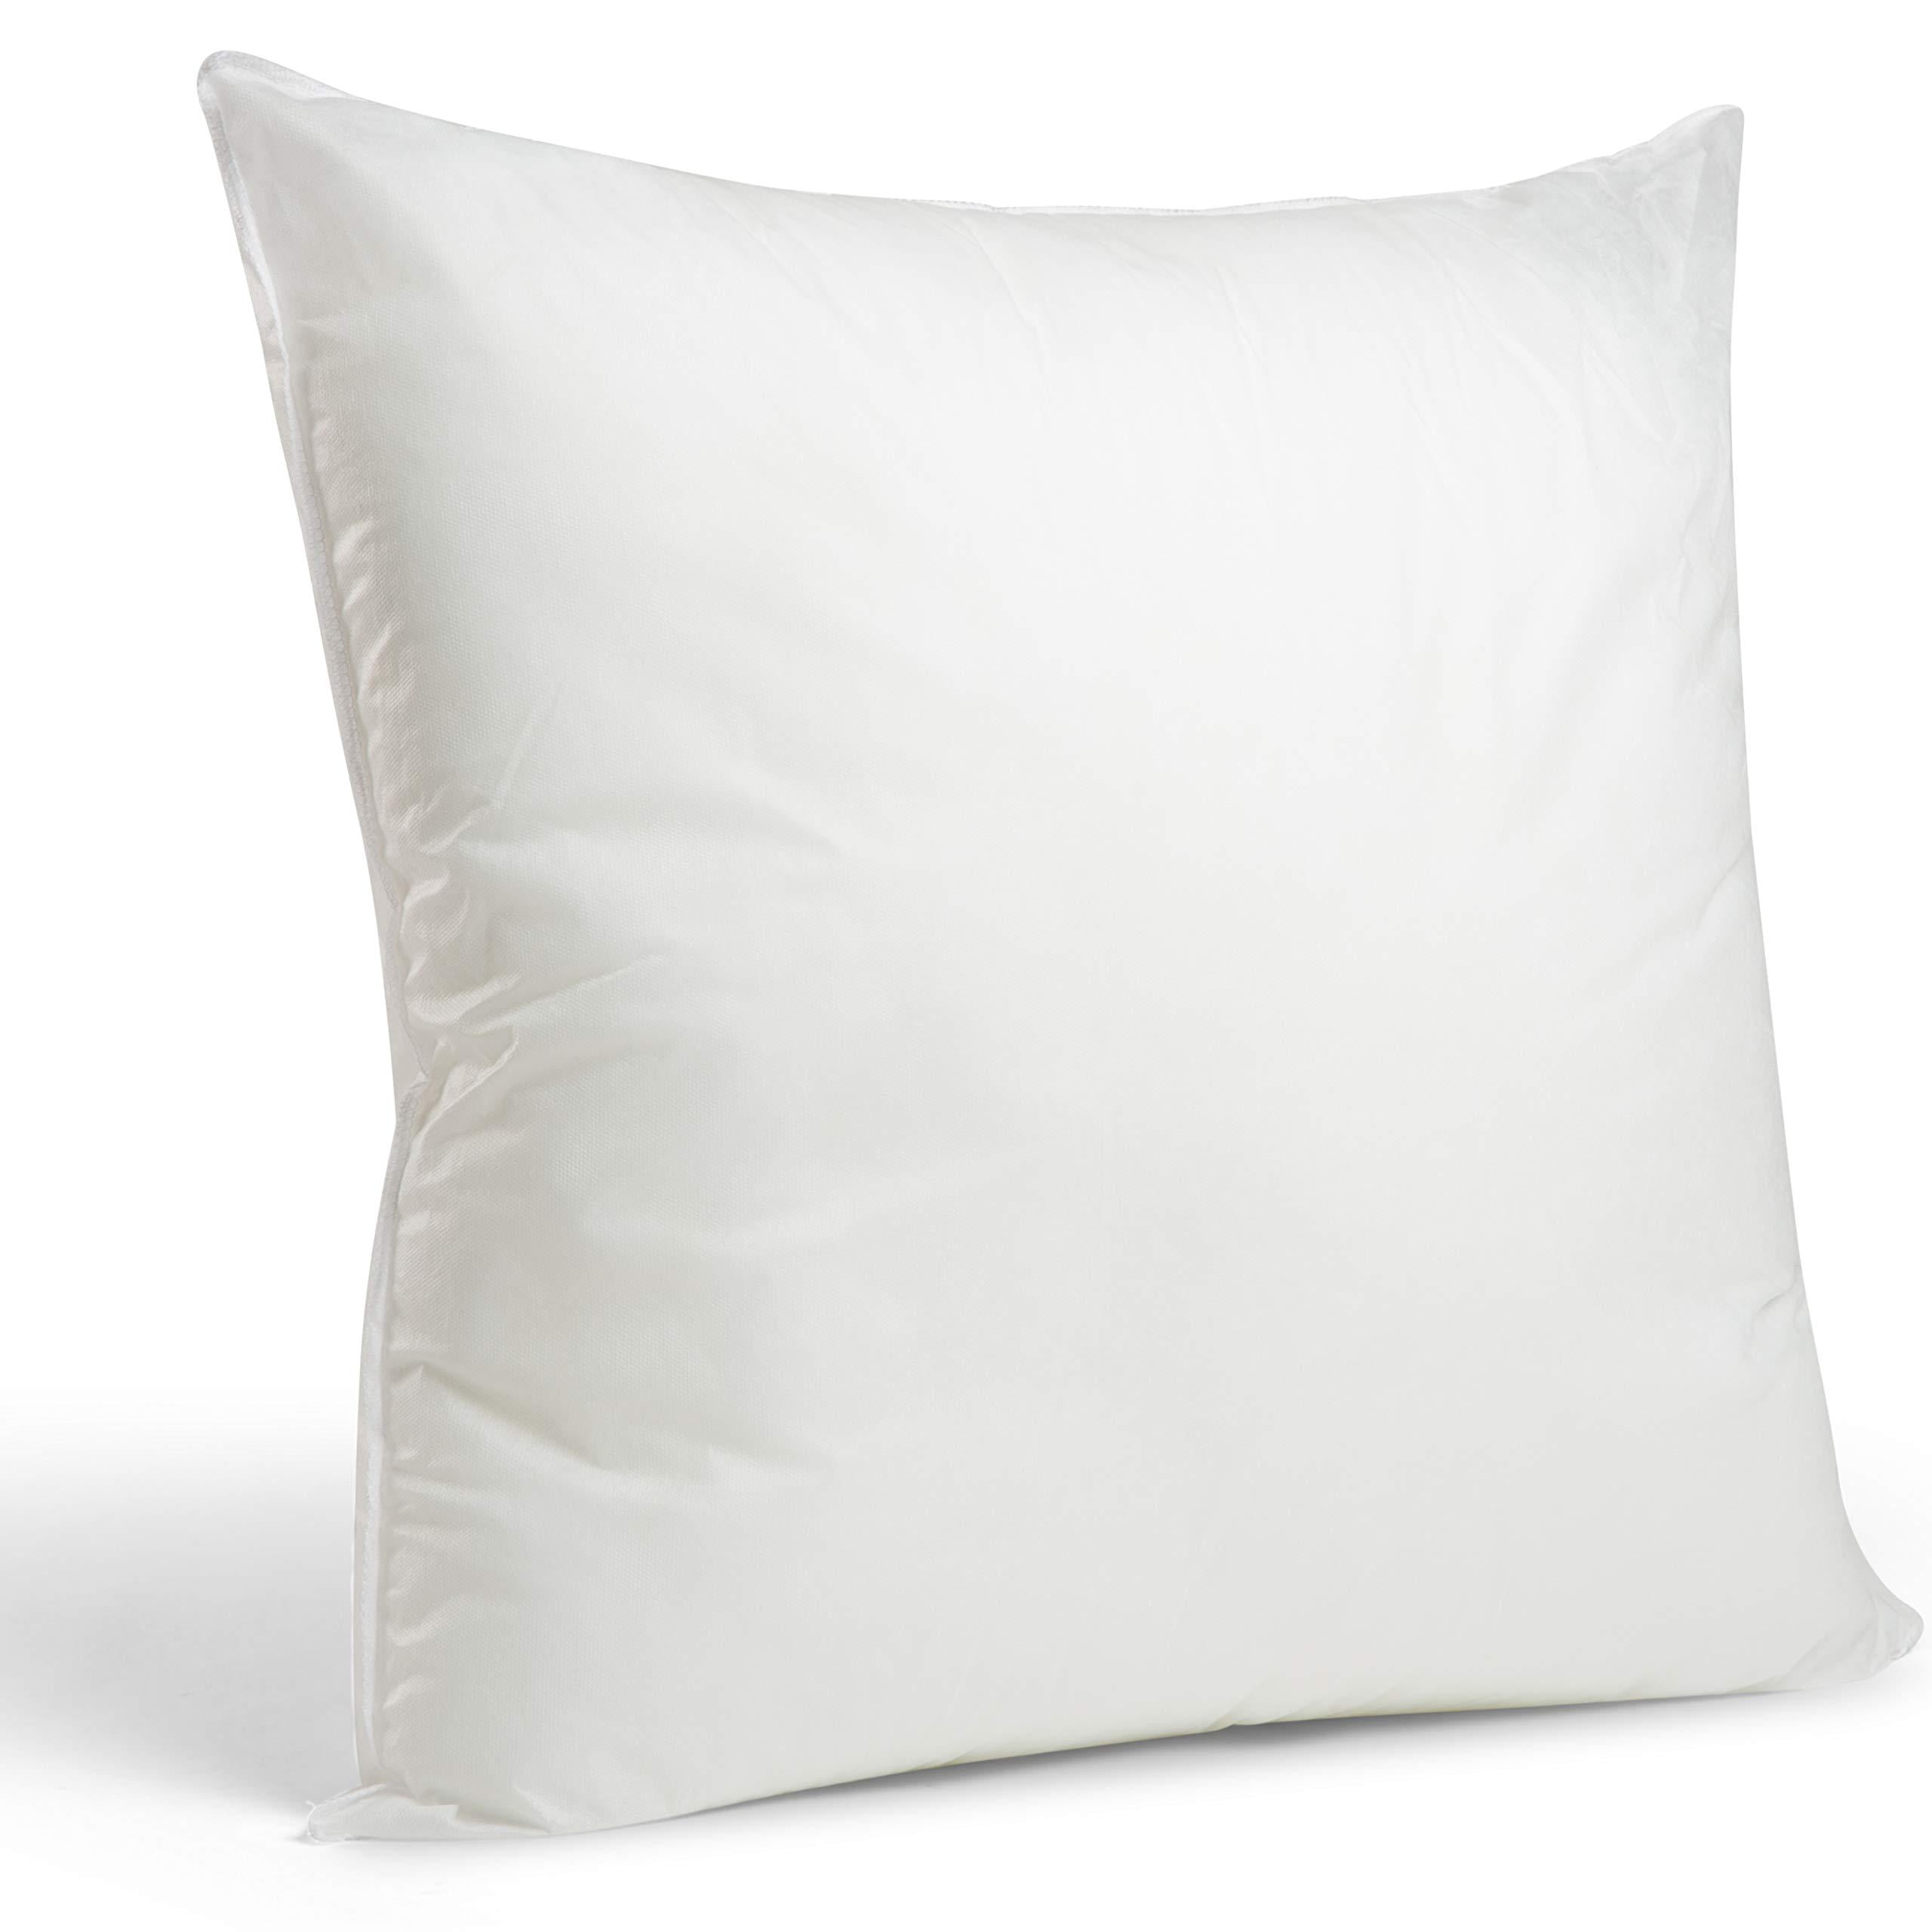 Bluffy Soft Throw Pillows Inserts Lightweight Down Alternative Polyester Pillows Couch Cushion Sham Stuffer Set of 2 26x26 